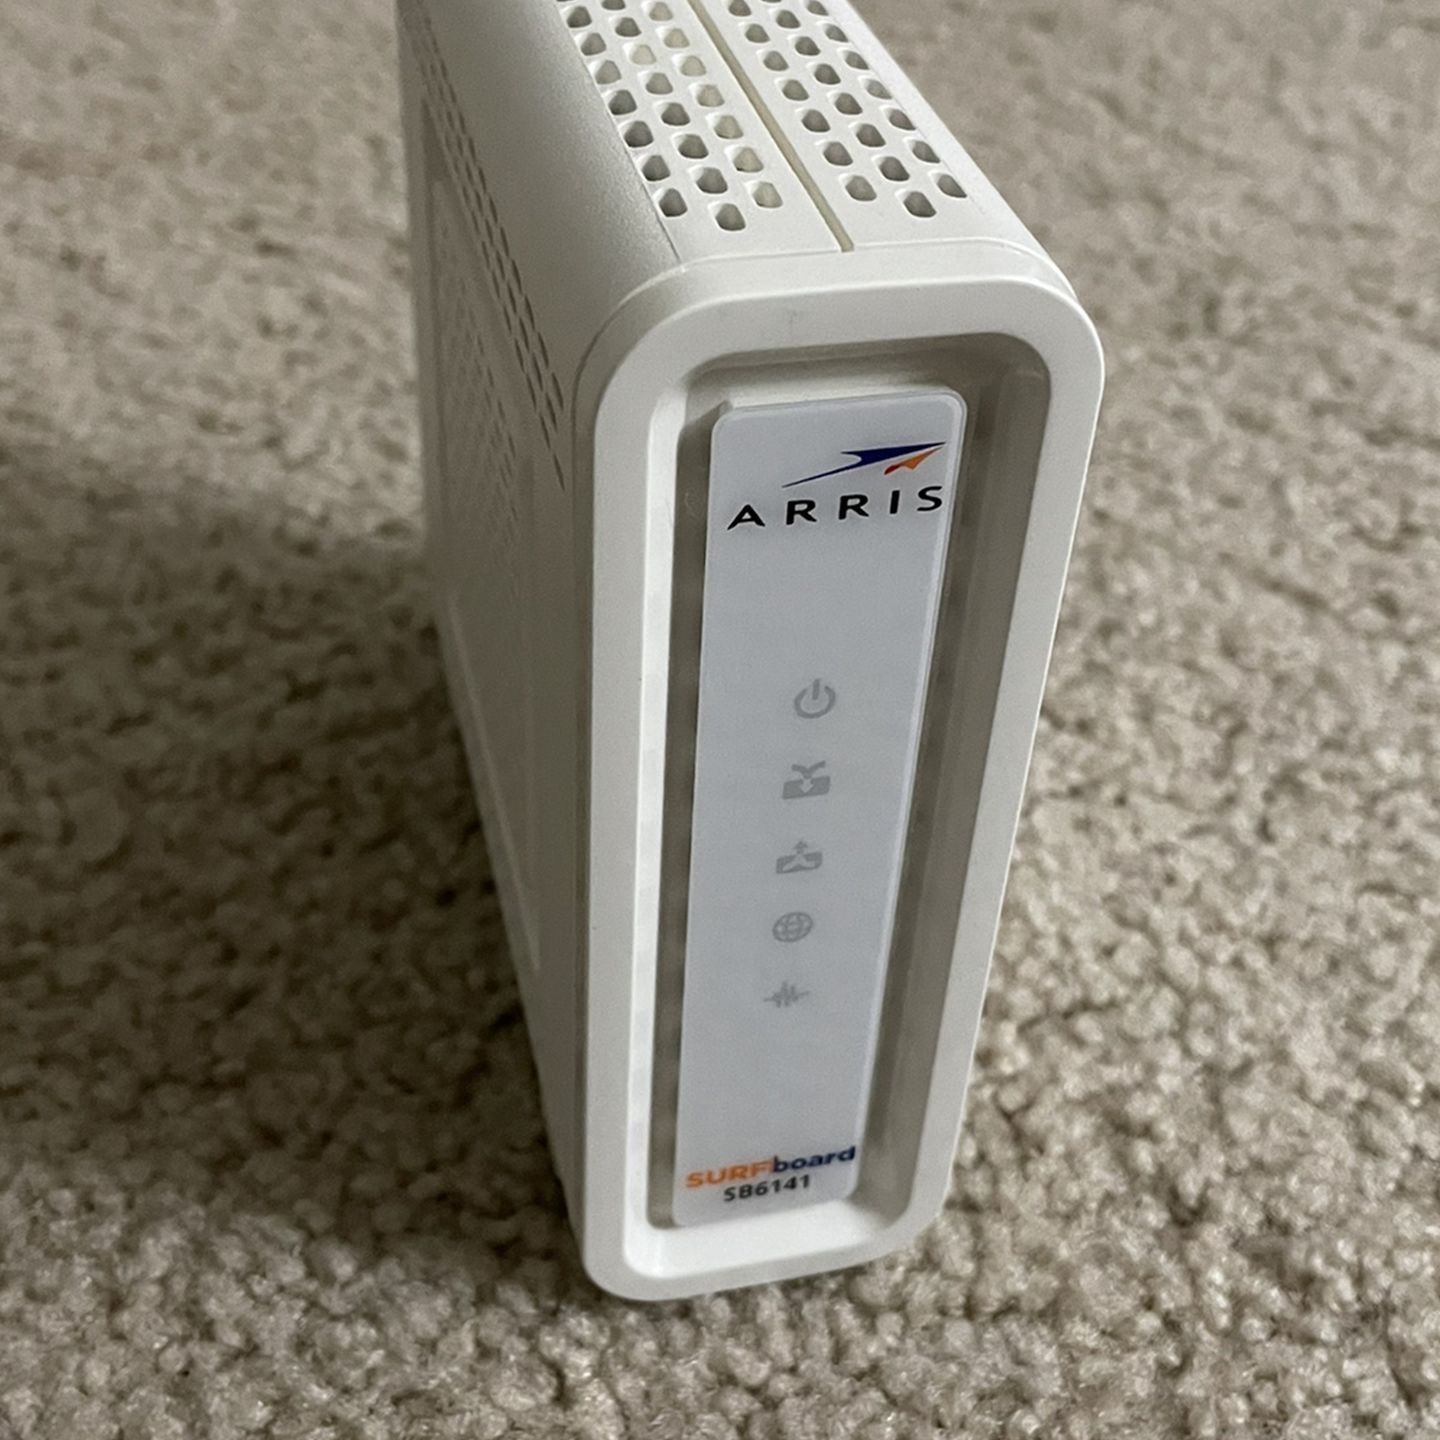 Motorola ARRIS SB6141 Wifi modem